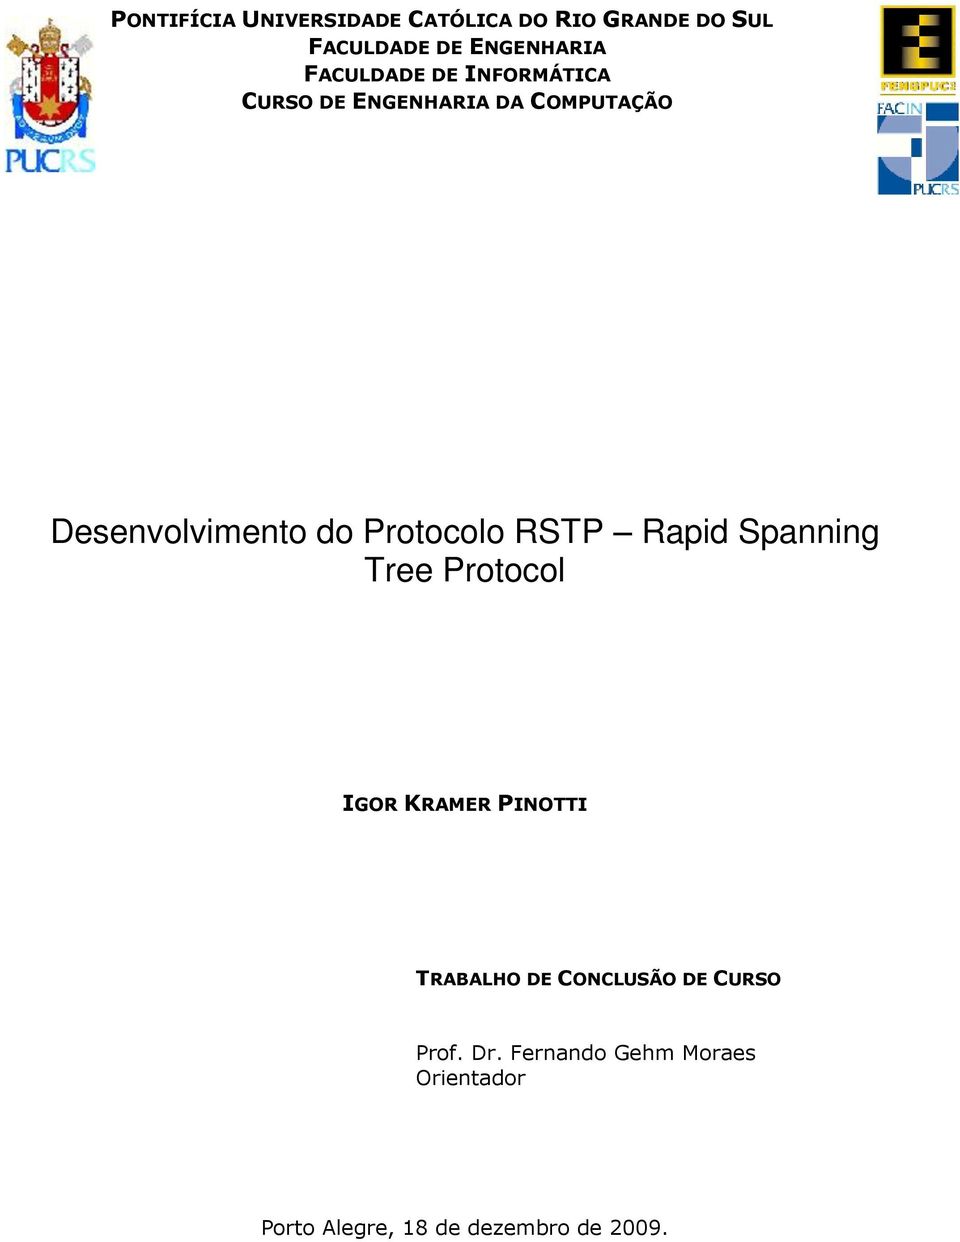 Protocolo RSTP Rapid Spanning Tree Protocol IGOR KRAMER PINOTTI TRABALHO DE